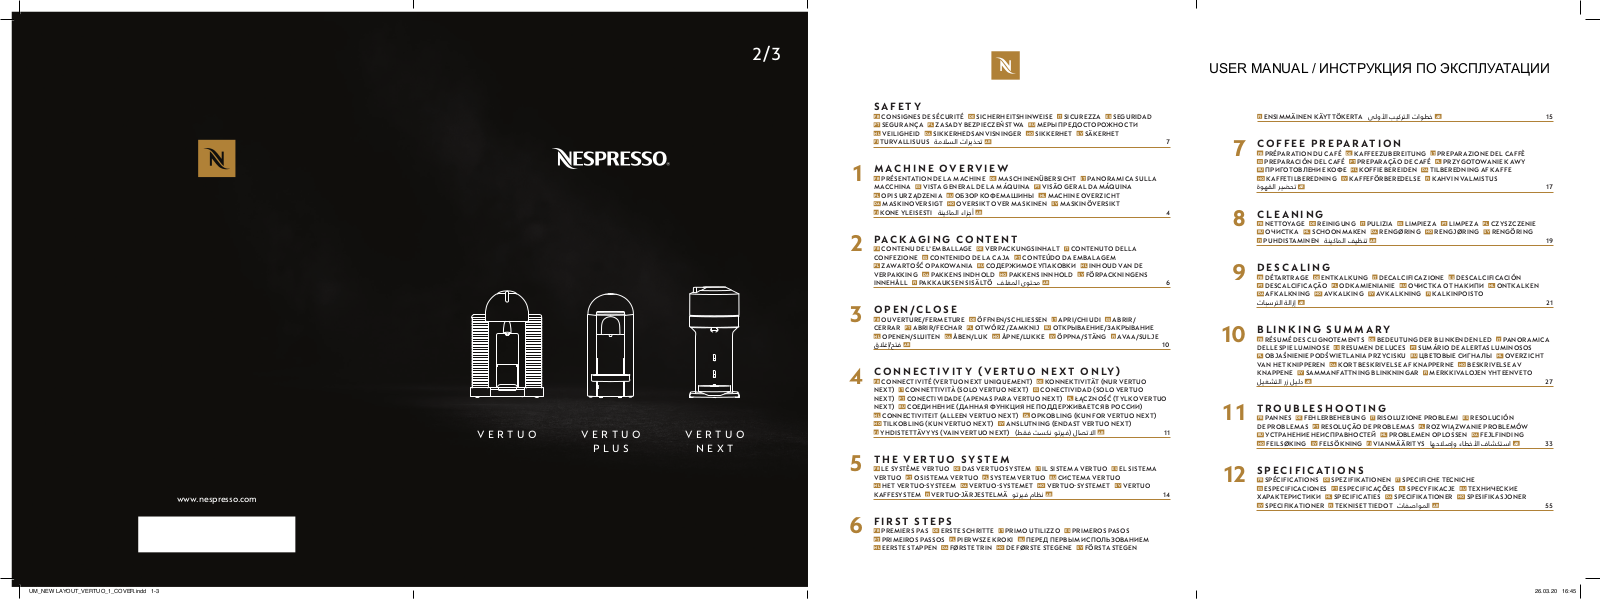 Nespresso VERTUO, VERTUO PLUS, VERTUO NEXT User Manual